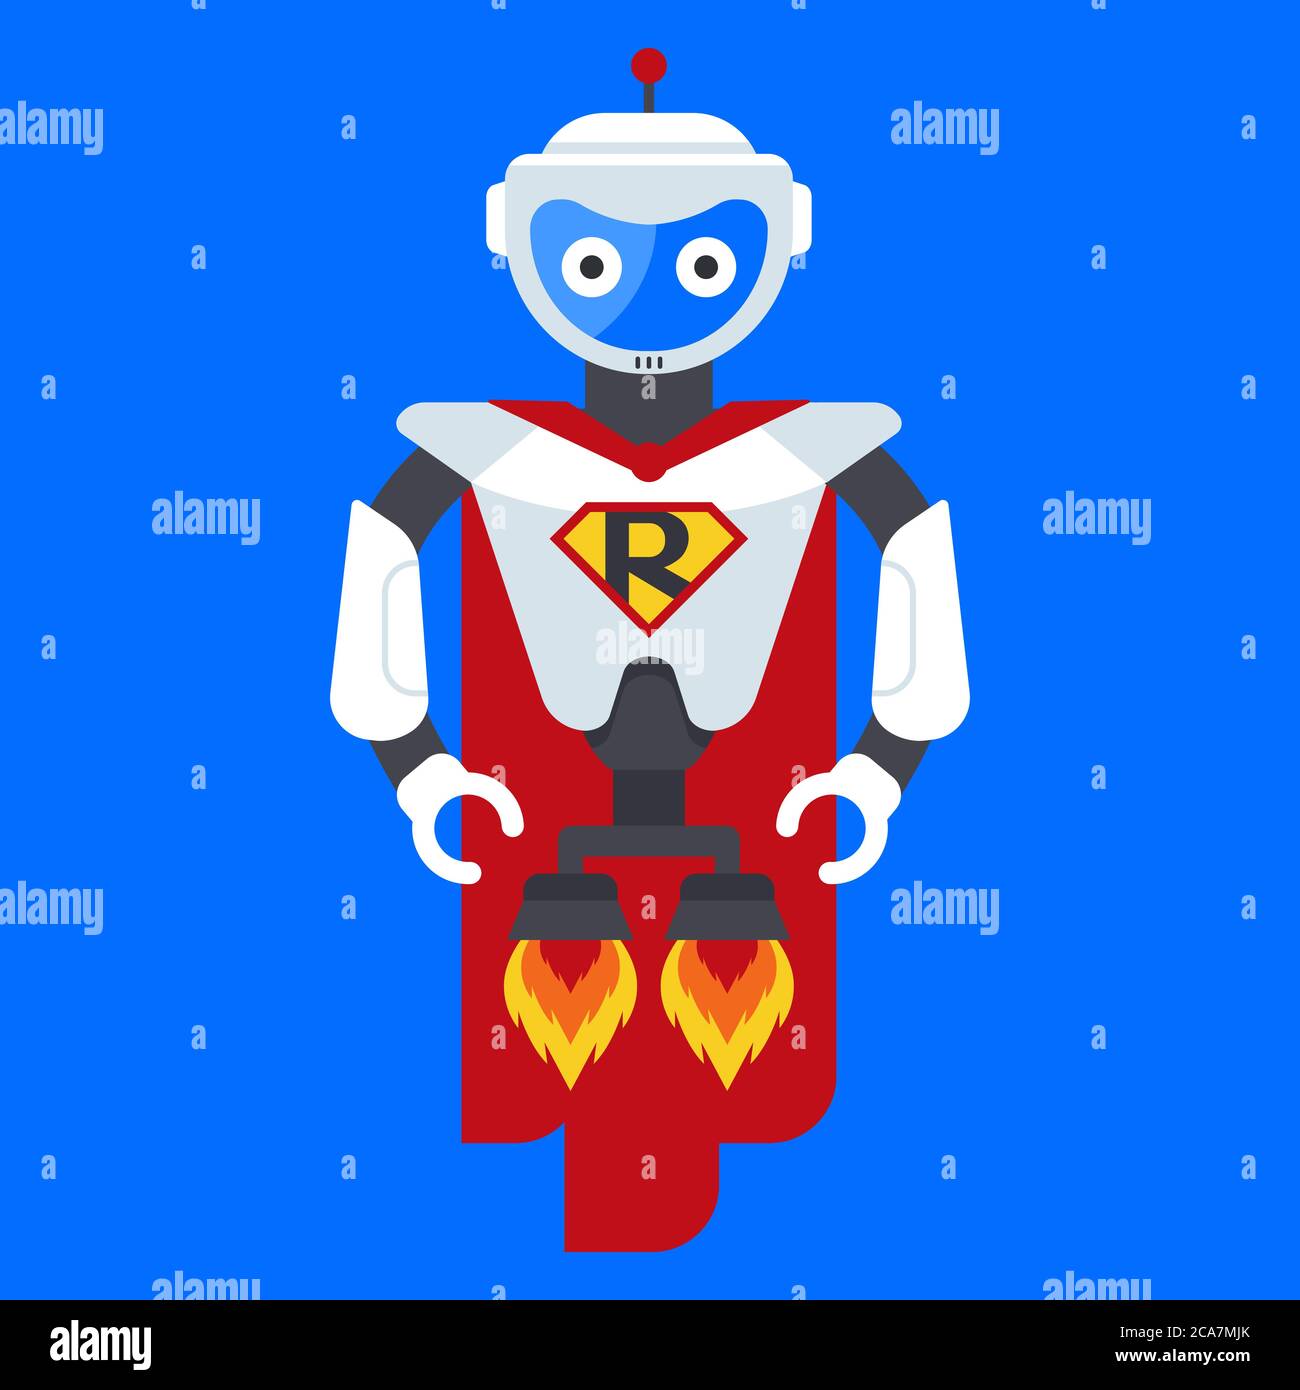 Eisen-Roboter-Superheld. Charakter aus der Zukunft. Science-Fiction-Helden.  Flache Vektor-Illustration Stock-Vektorgrafik - Alamy